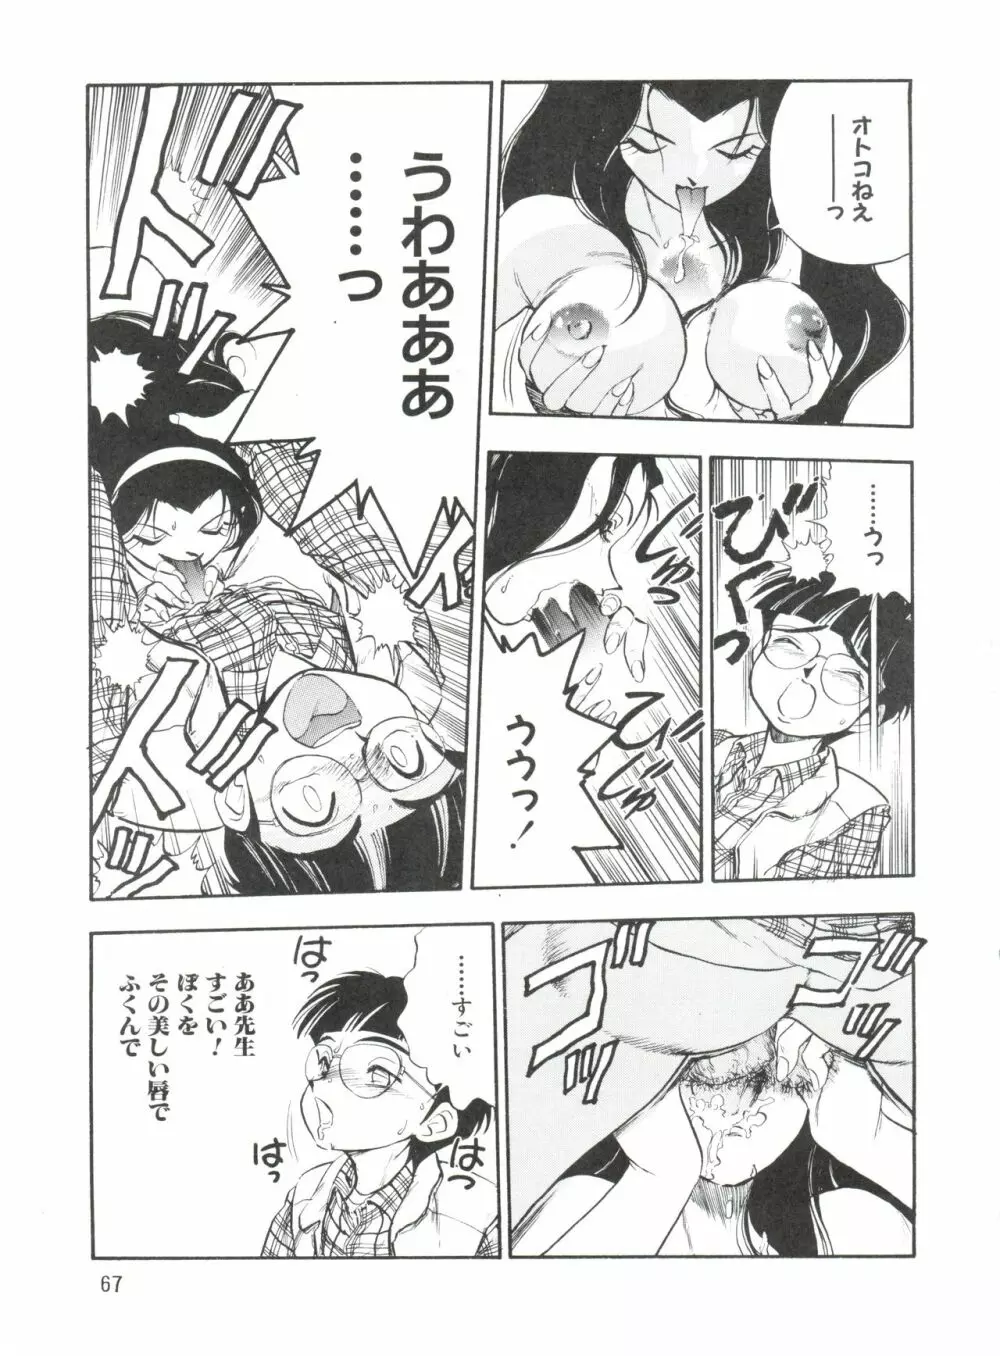 1997 WINTER 電撃犬王 - page68